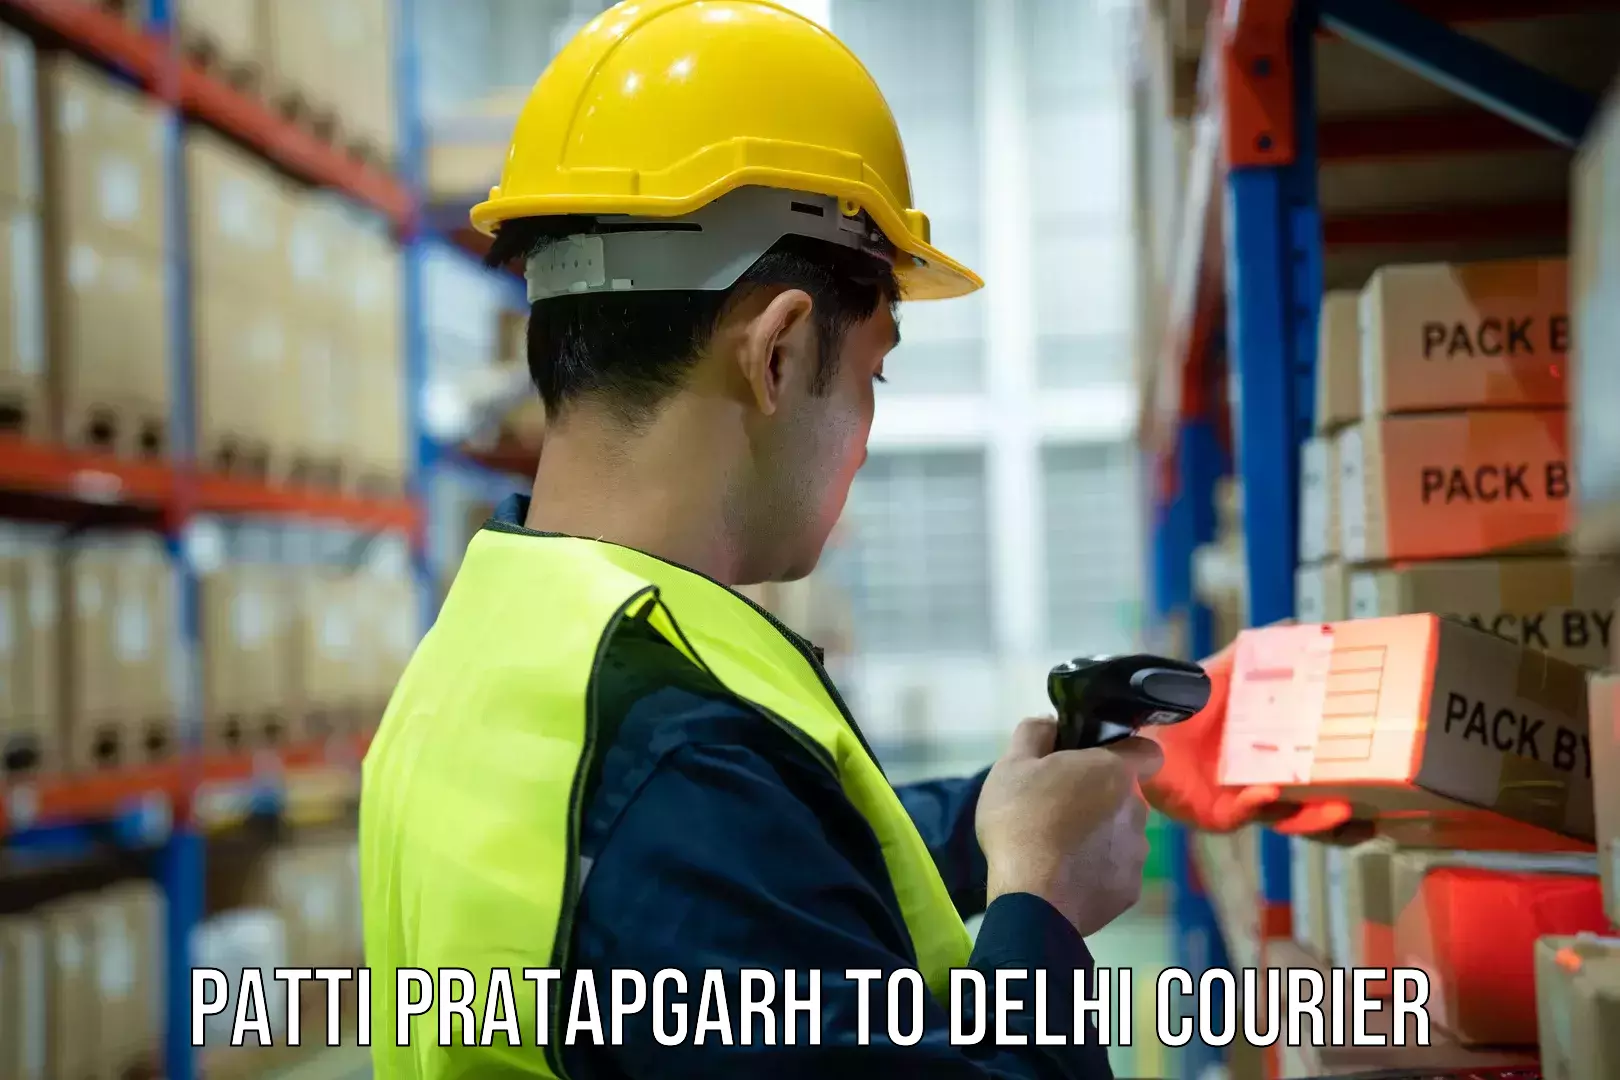 Dynamic courier operations Patti Pratapgarh to NCR